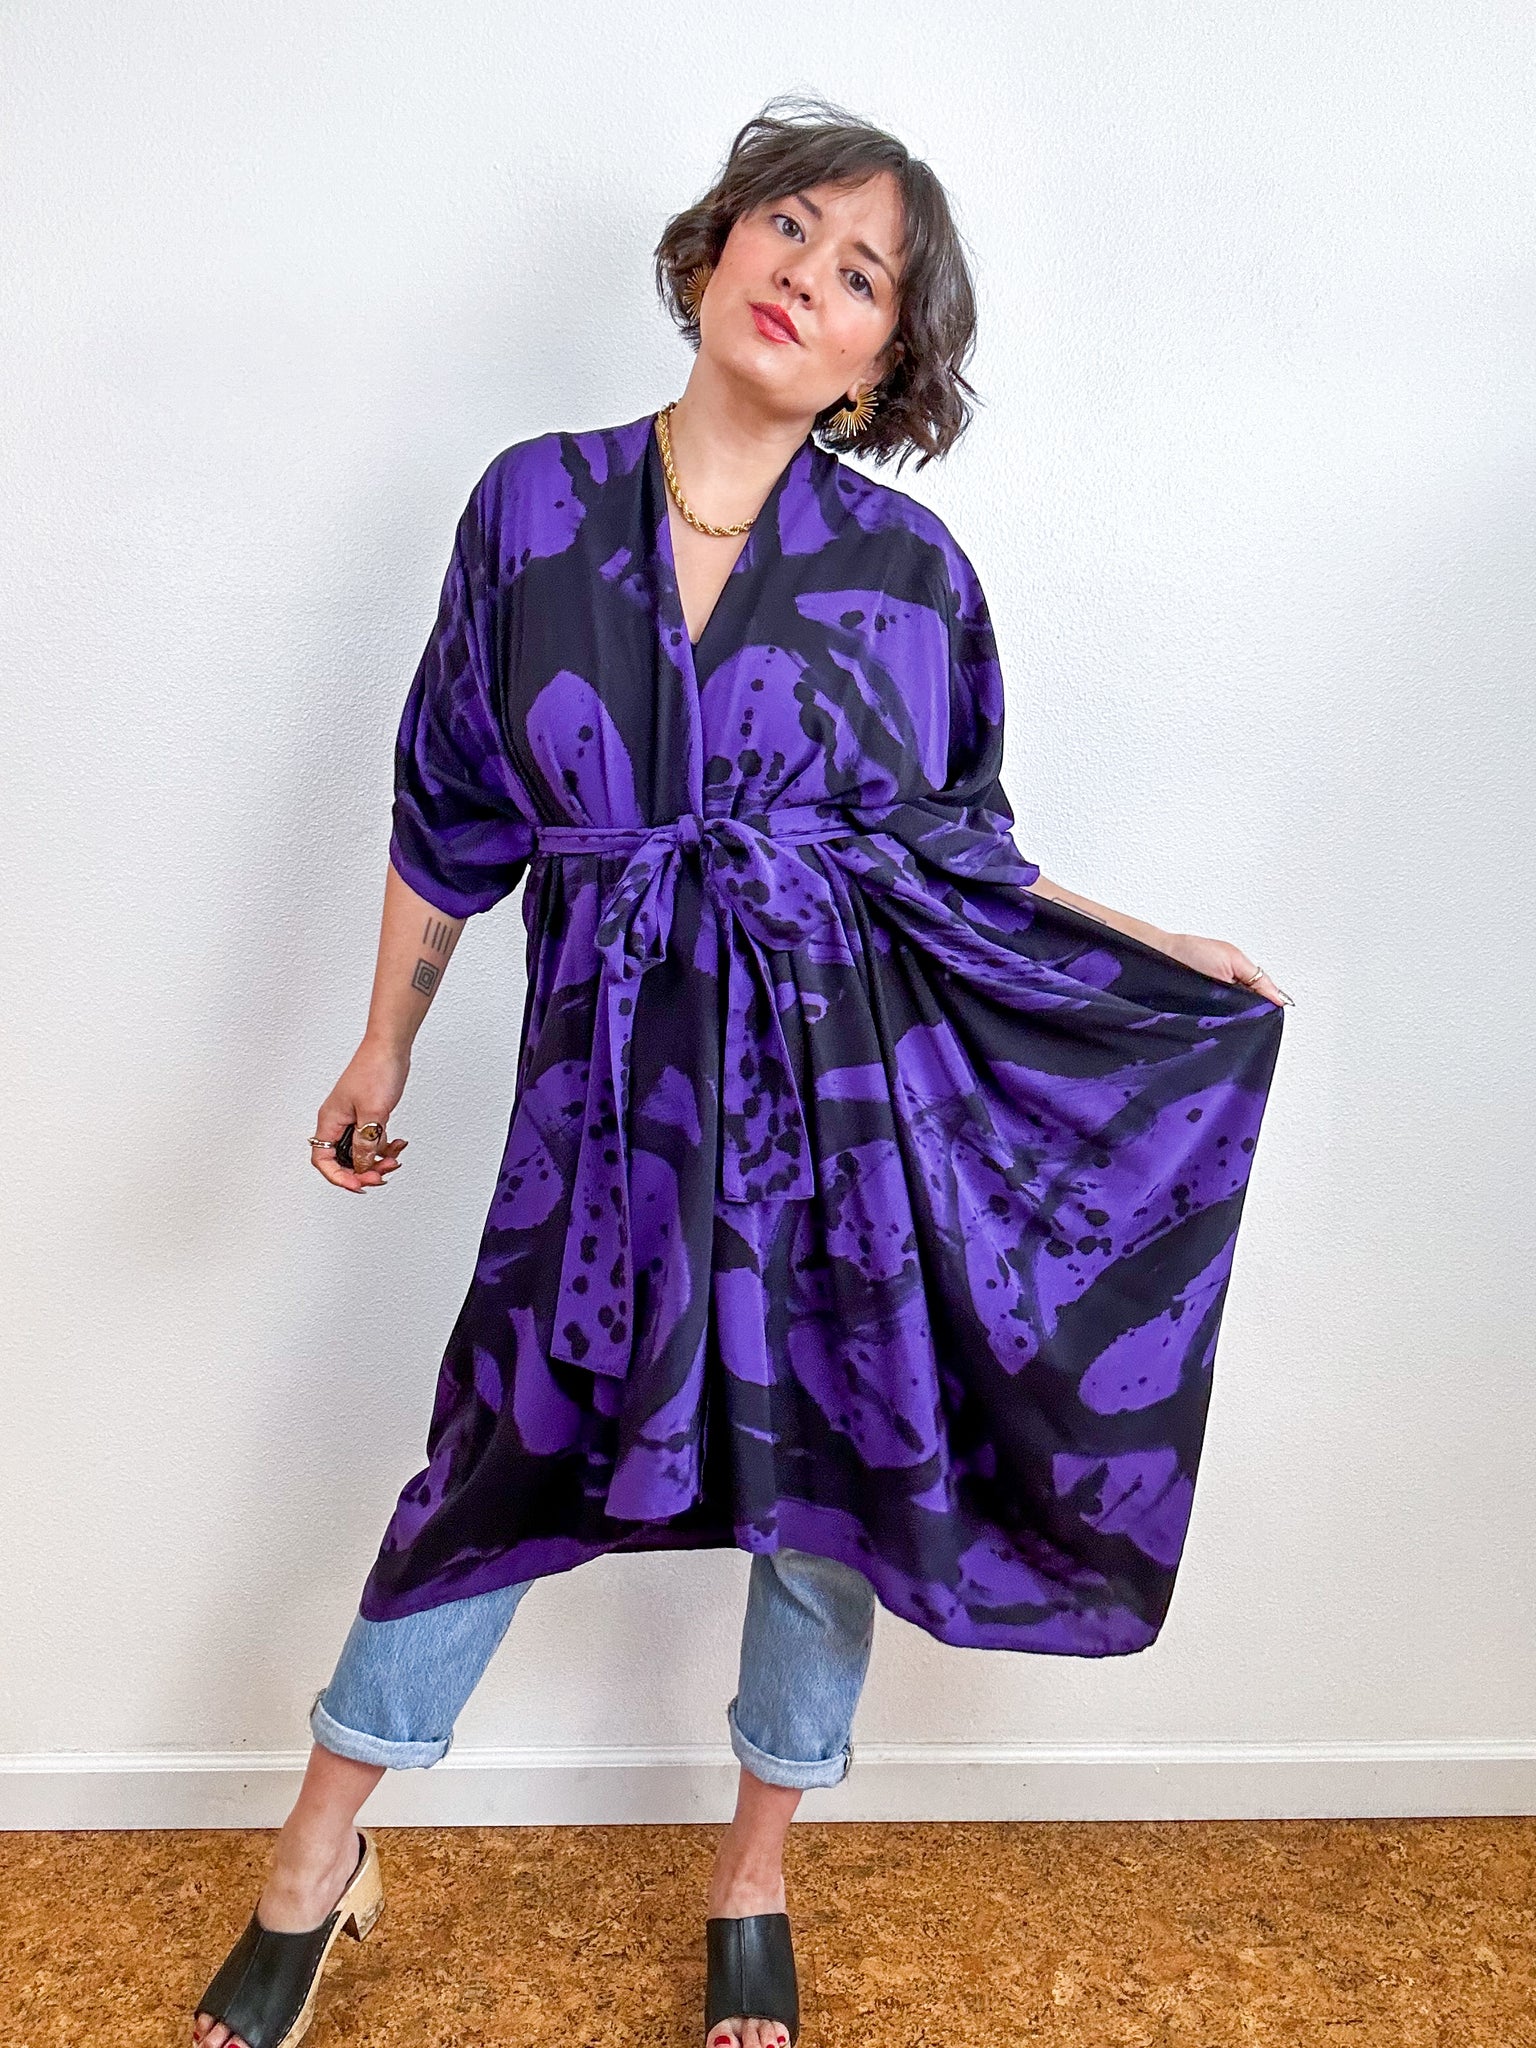 Hand-Dyed High Low Kimono Purple Black Sumi